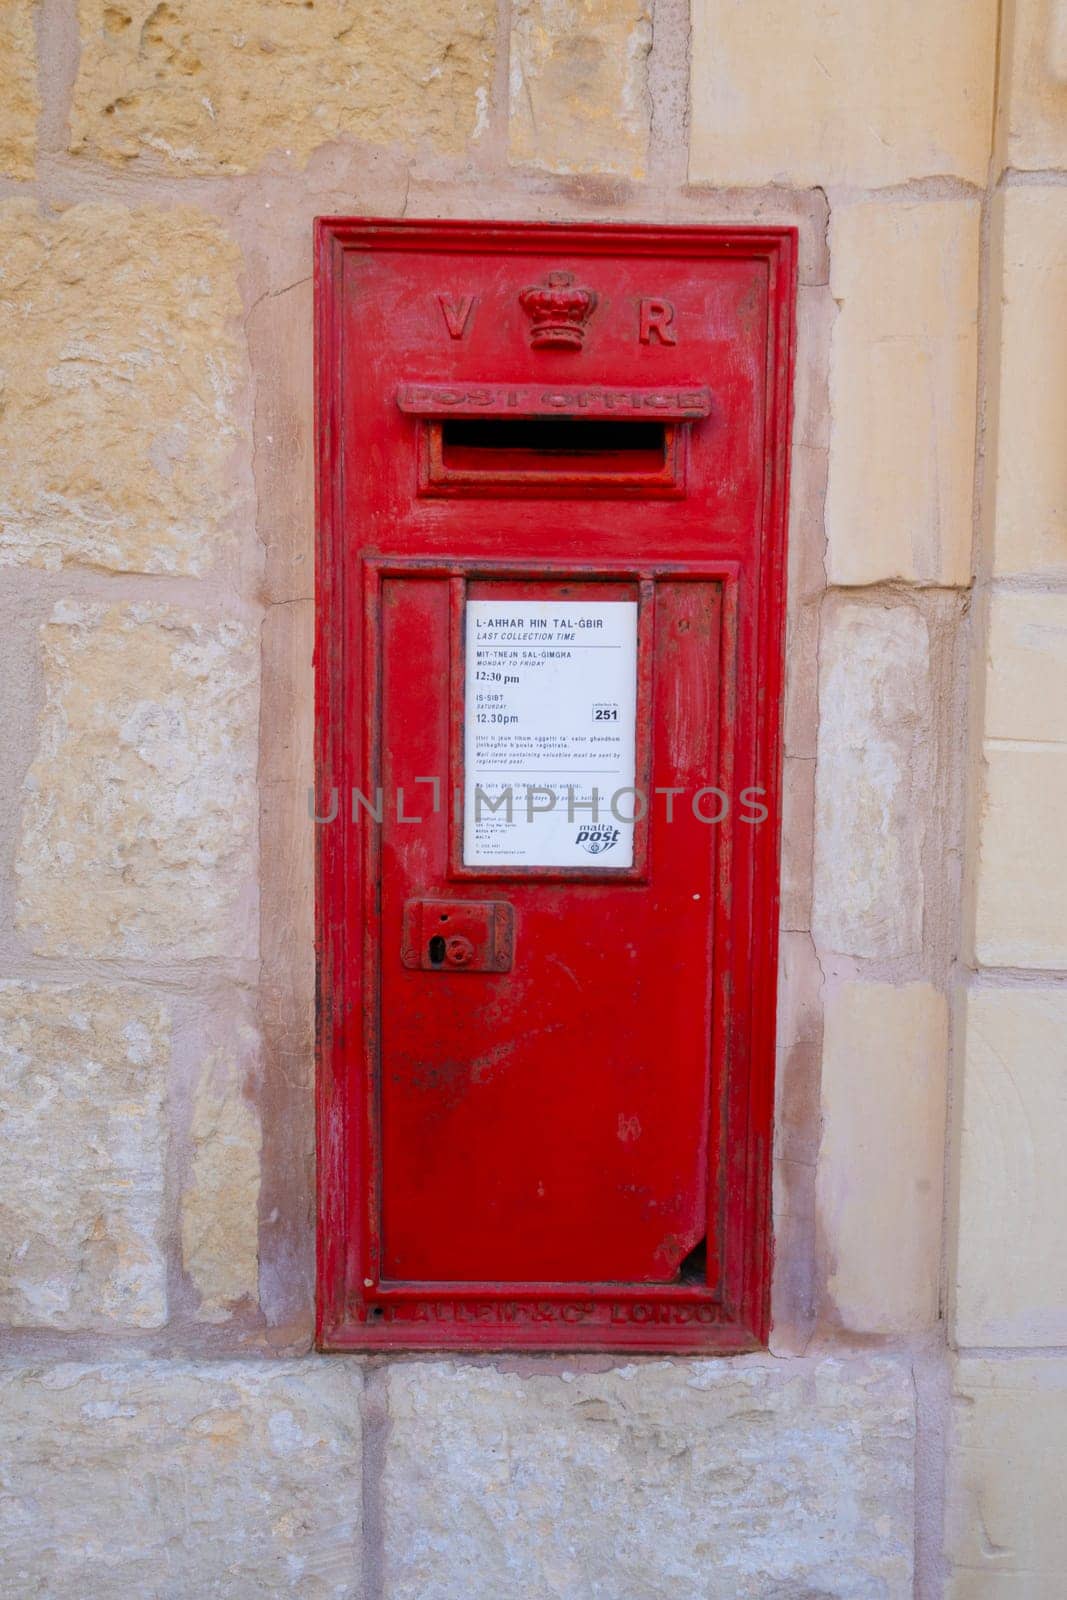 Red postbox in Valletta, Malta by sergiodv